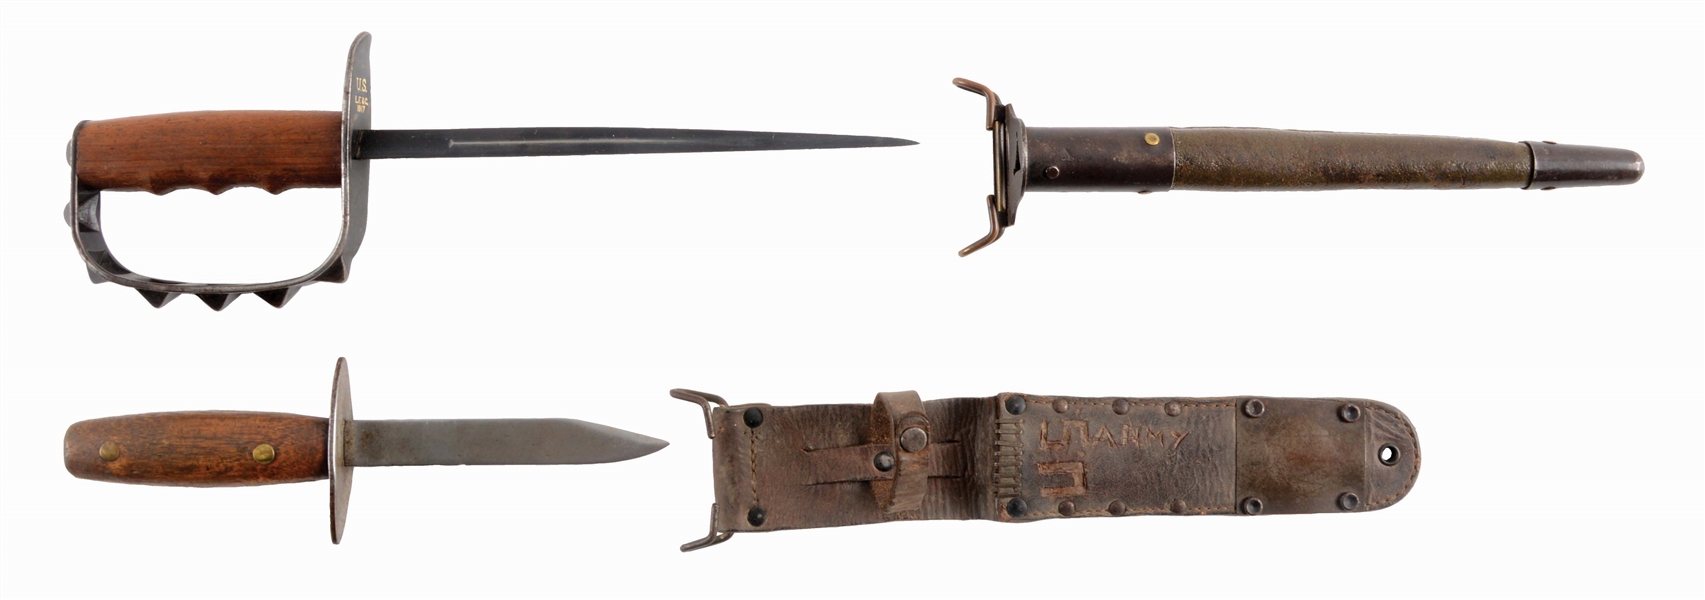 LOT OF 2: U.S. WWI MODEL 1917 TRENCH KNIFE & HANDMADE COMBAT KNIFE IN M6 SHEATH.